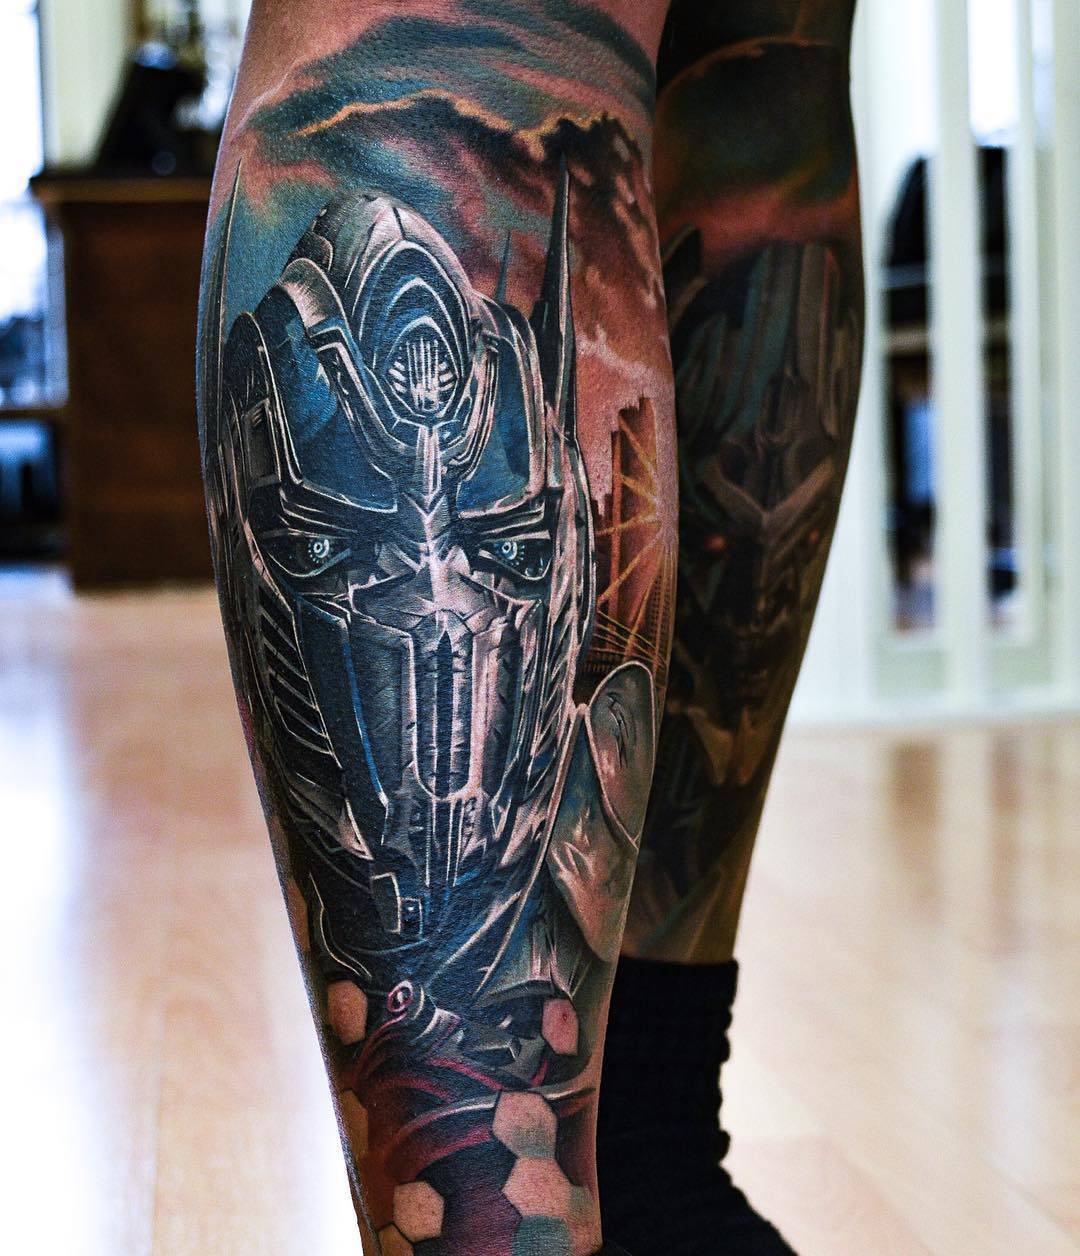 Transformers tattoos